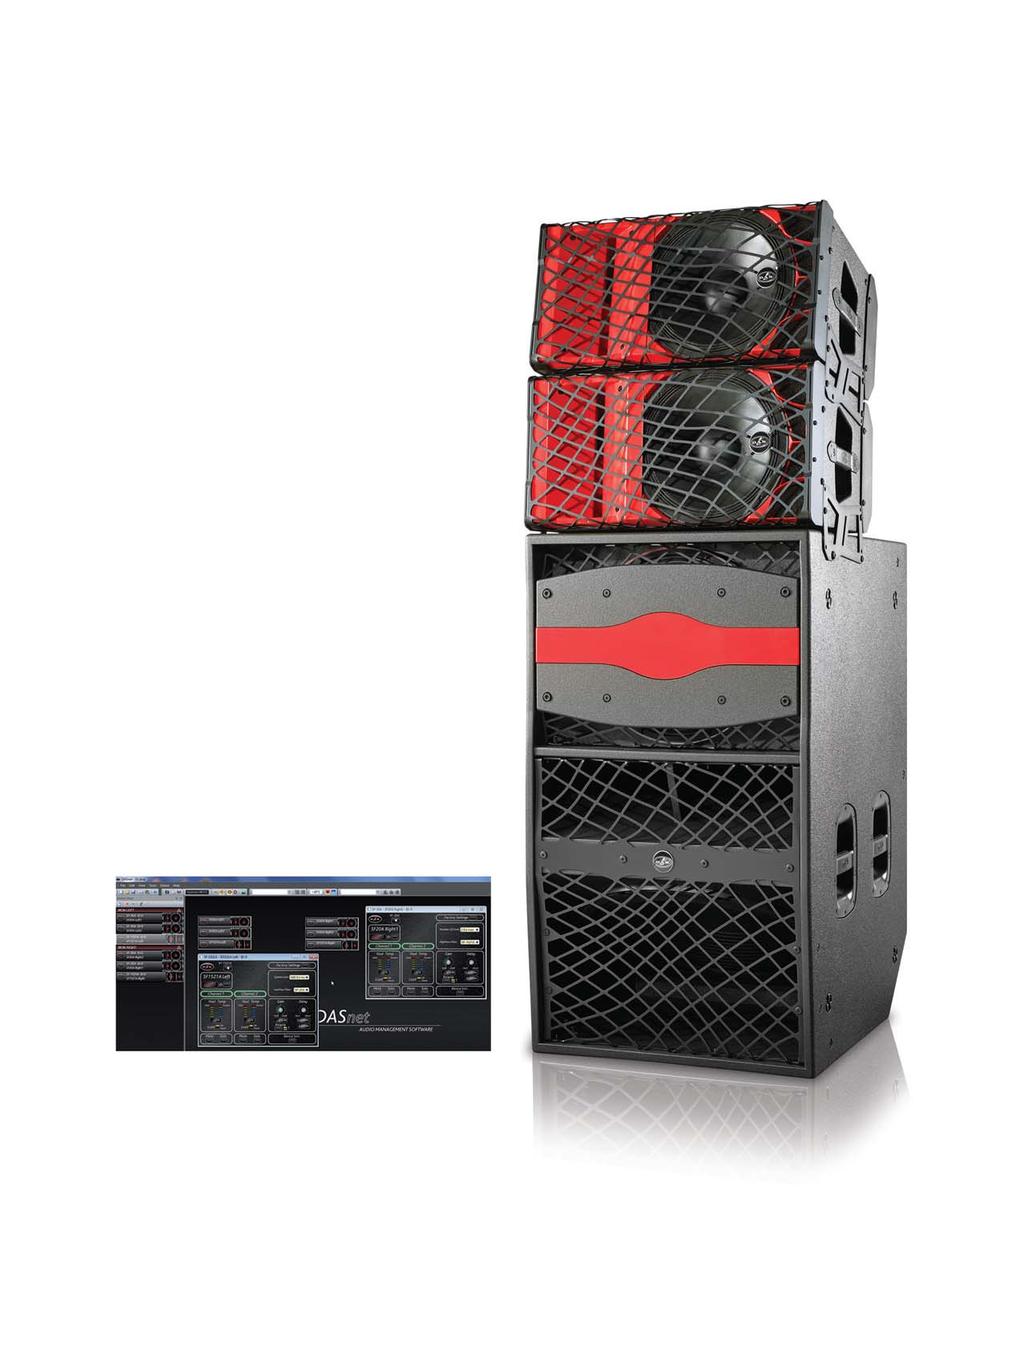 SOUND FORCE SF-Monitor El SF-Monitor (SF-M) es un sistema monitor DJ DJ s del mundo.